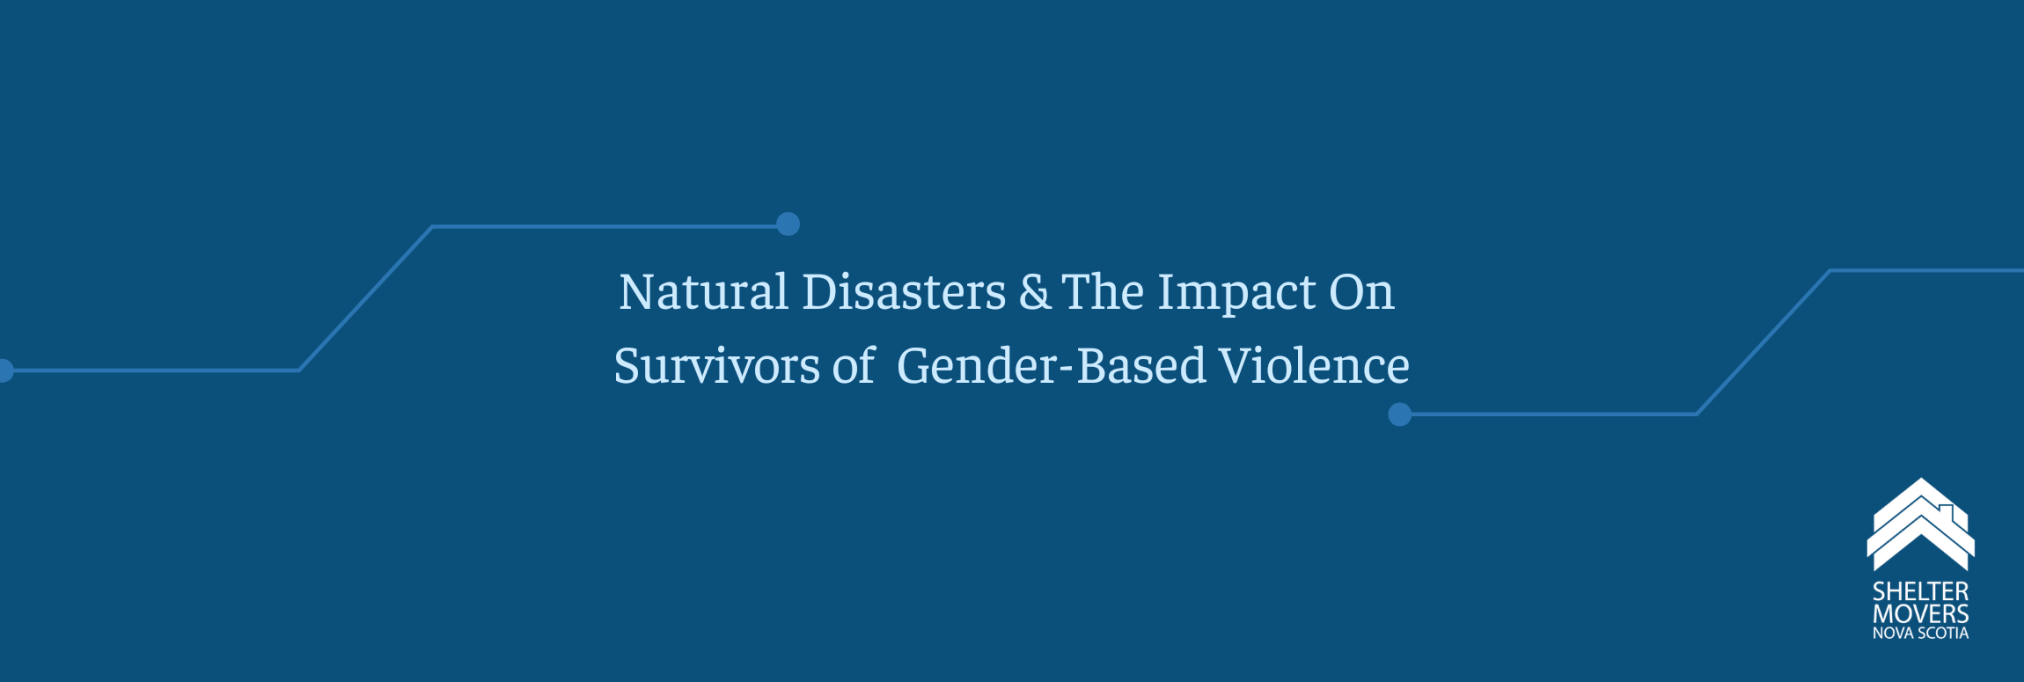 Natural Disasters & GBV